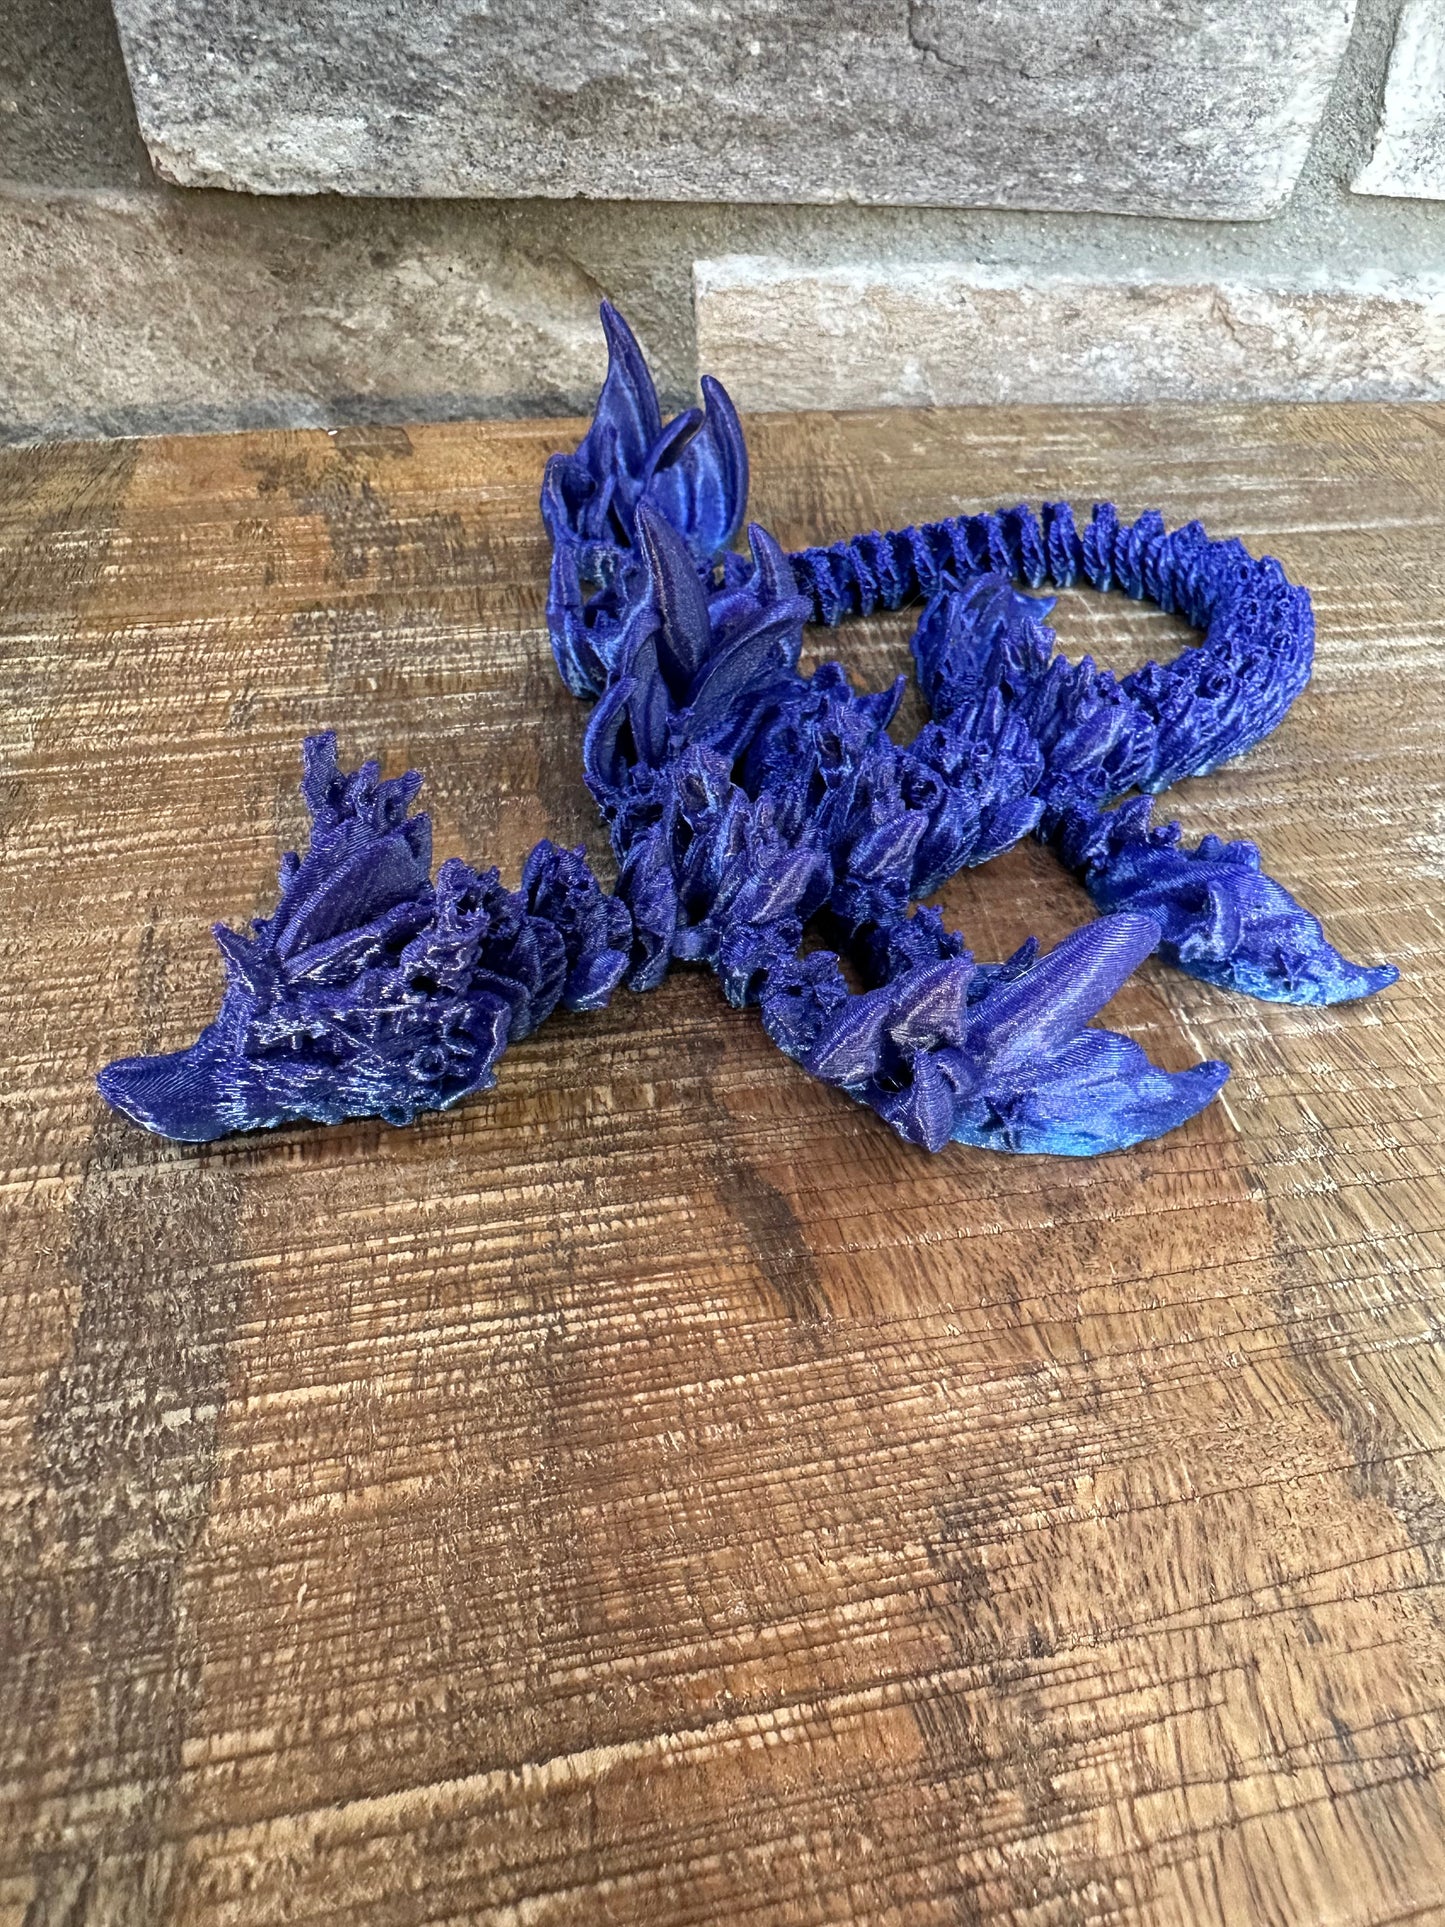 MINI Coral Reef Dragon | 3d Printed | Articulated Flexible | Custom Fidget Toy